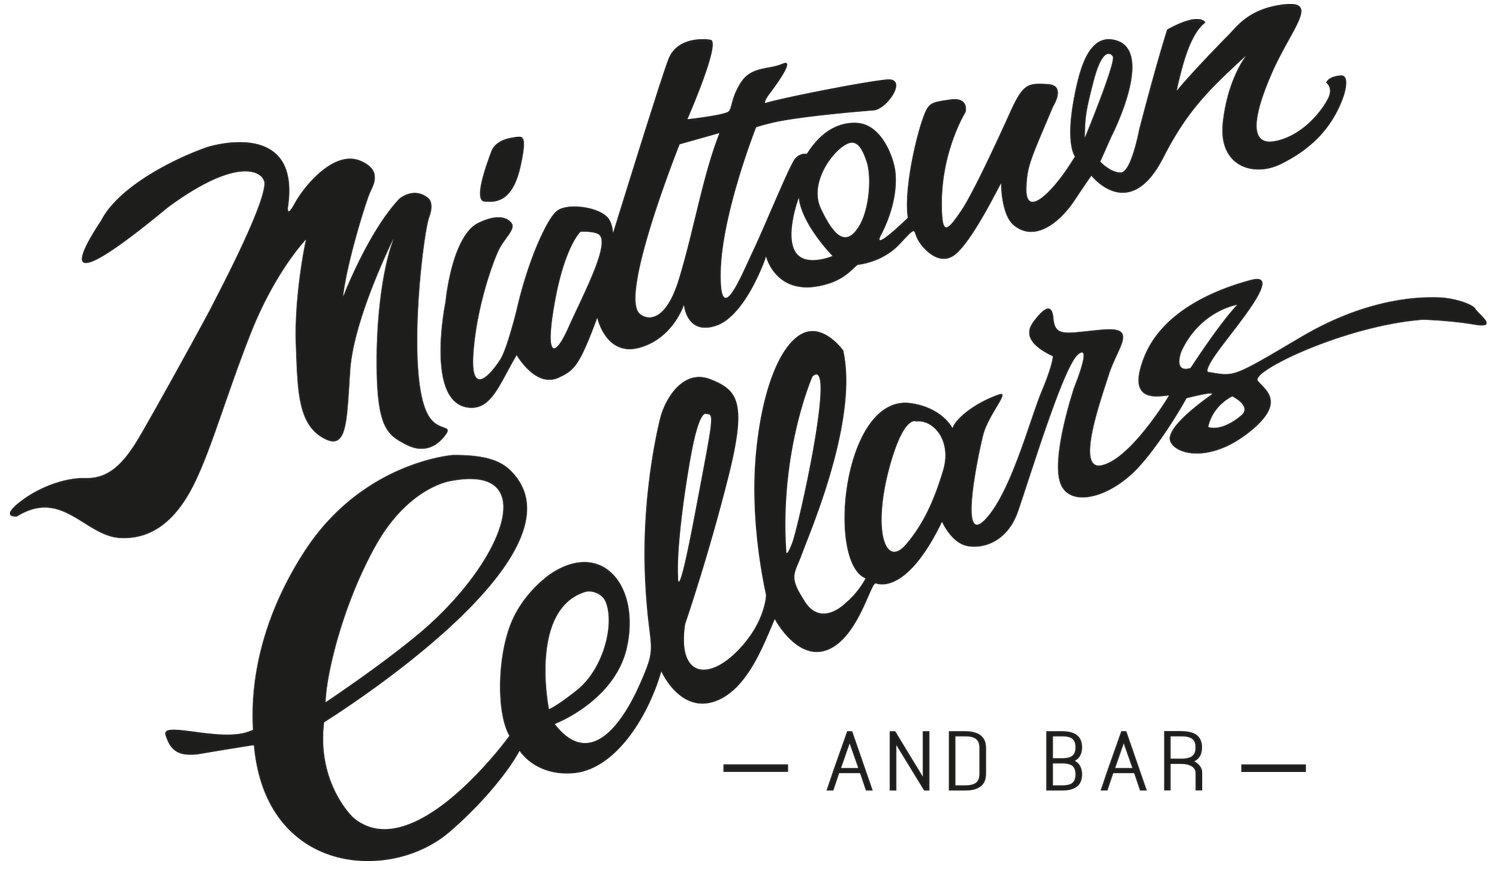 Midtown Cellars &amp; Bar